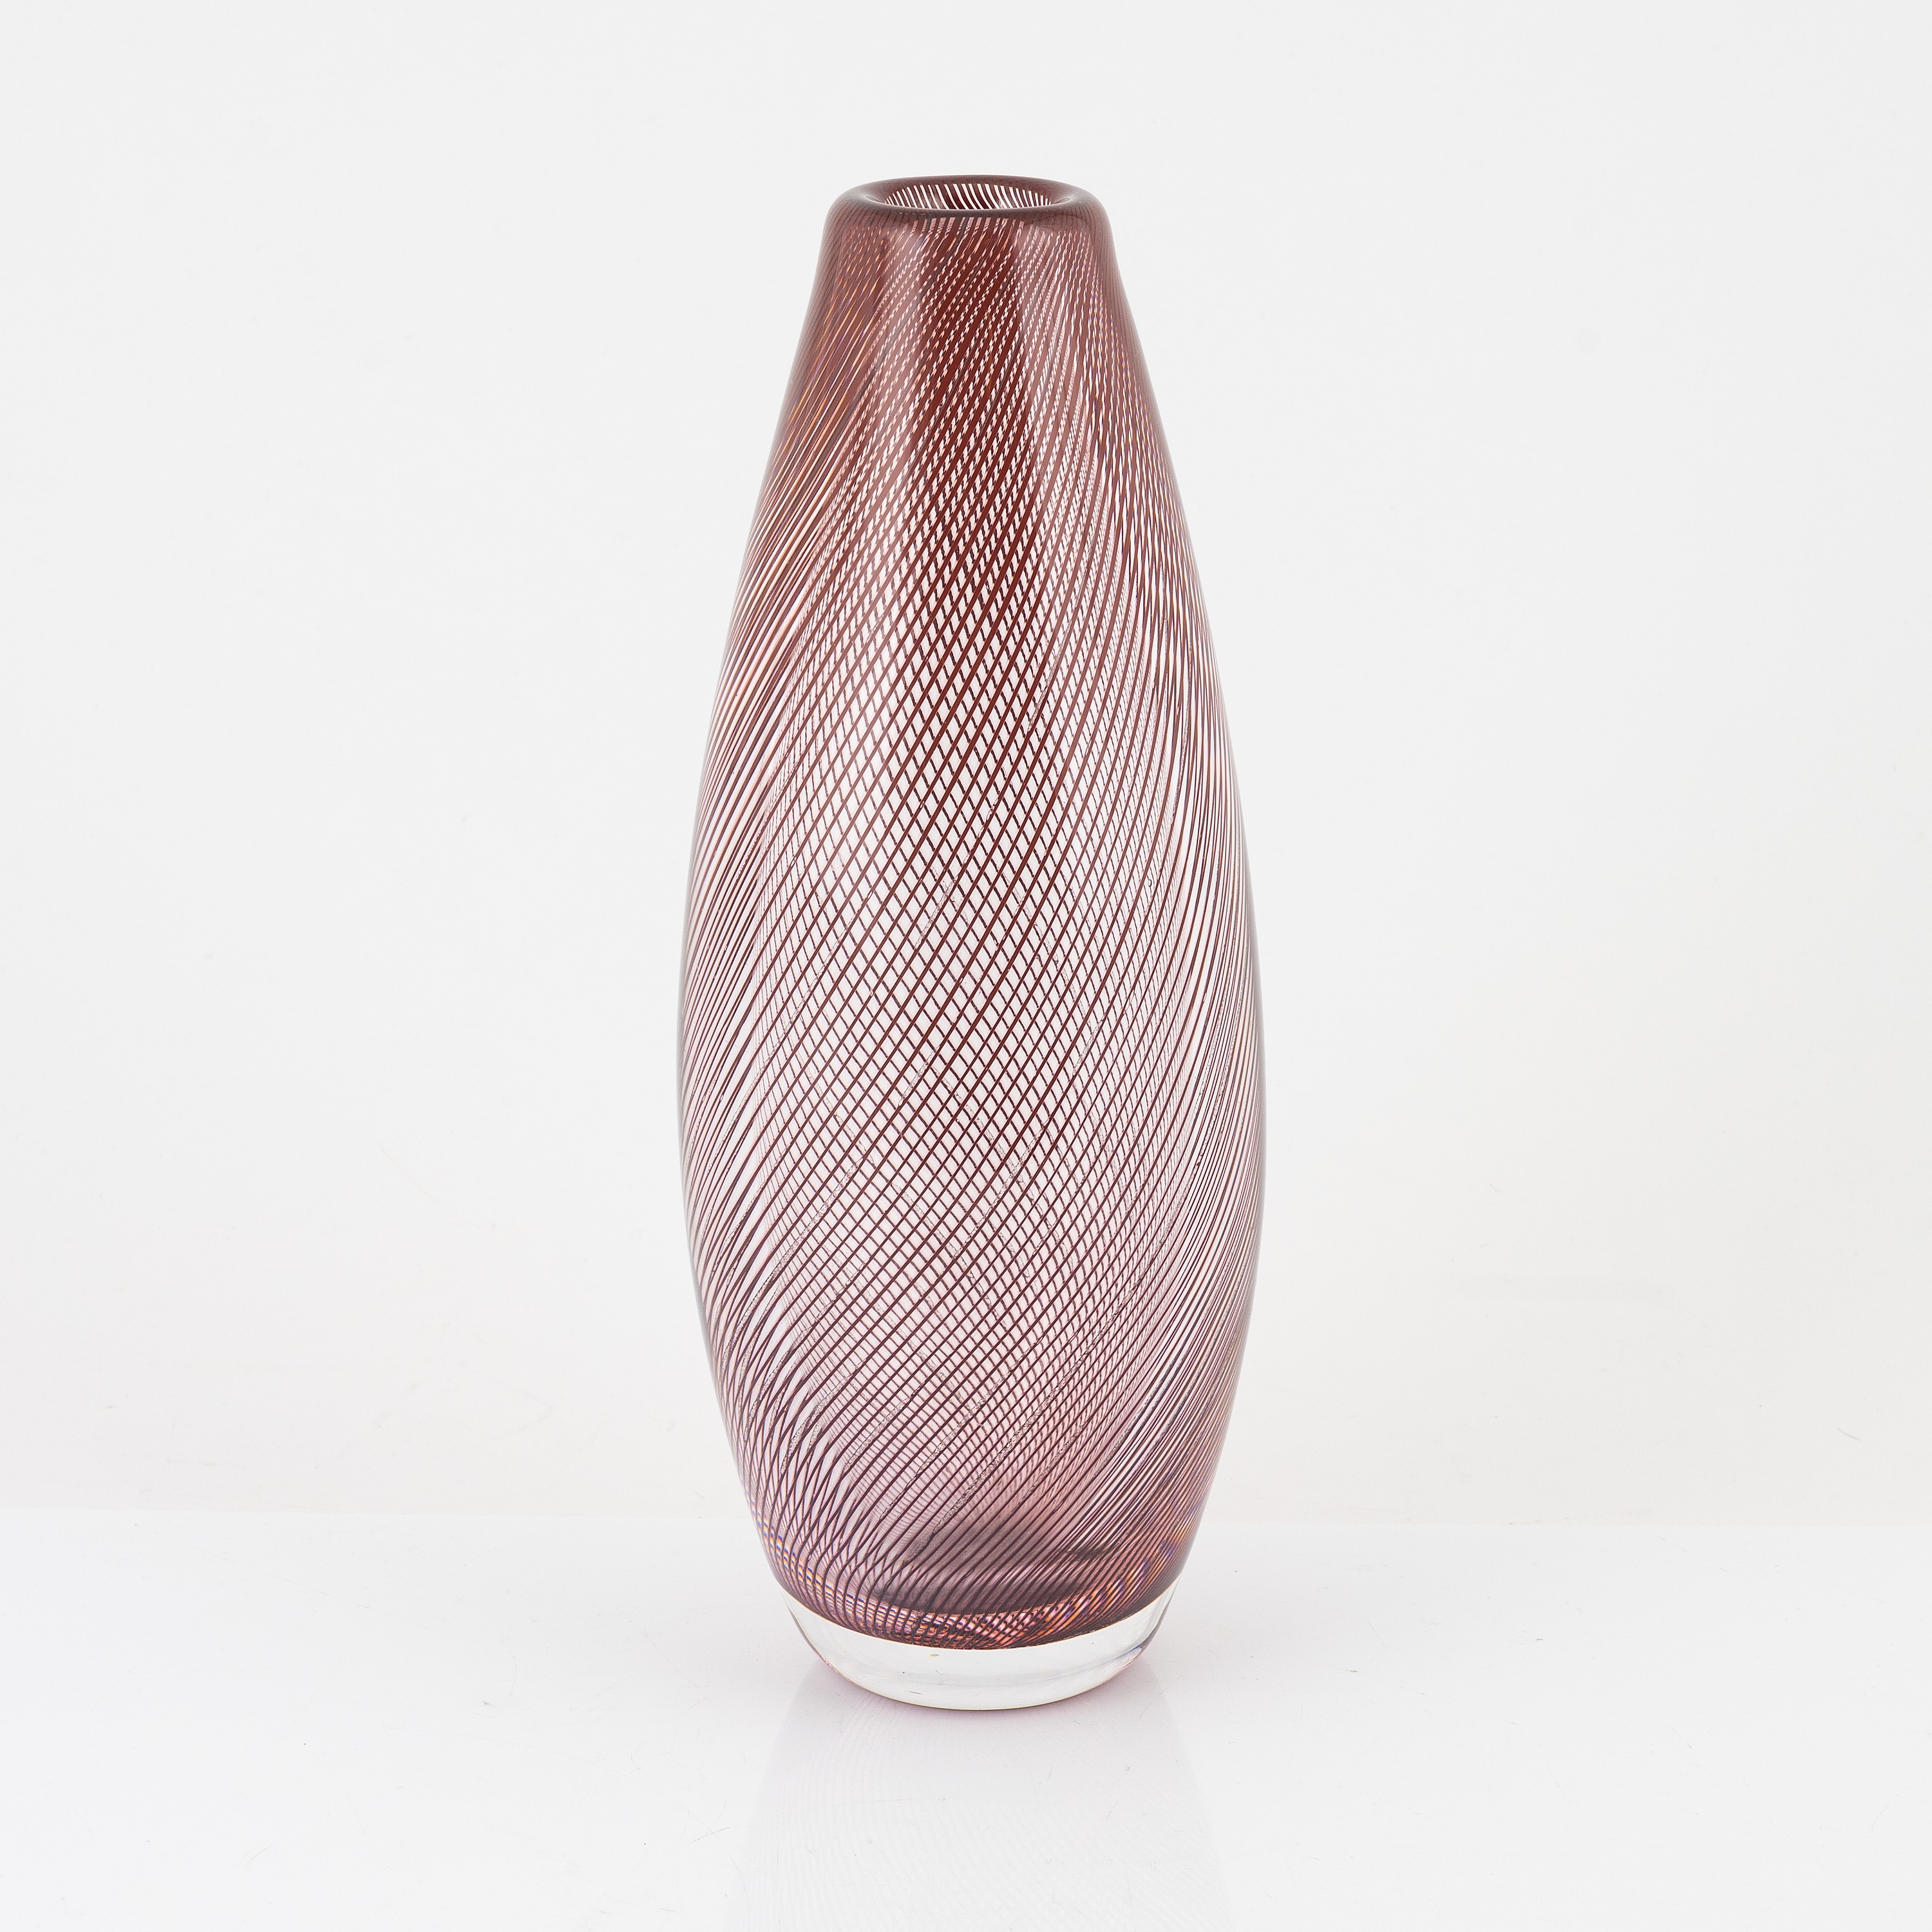 Edward Hald, a ’slipgraal’ glass vase, Orrefors, 1954. by Edward Hald, 1954